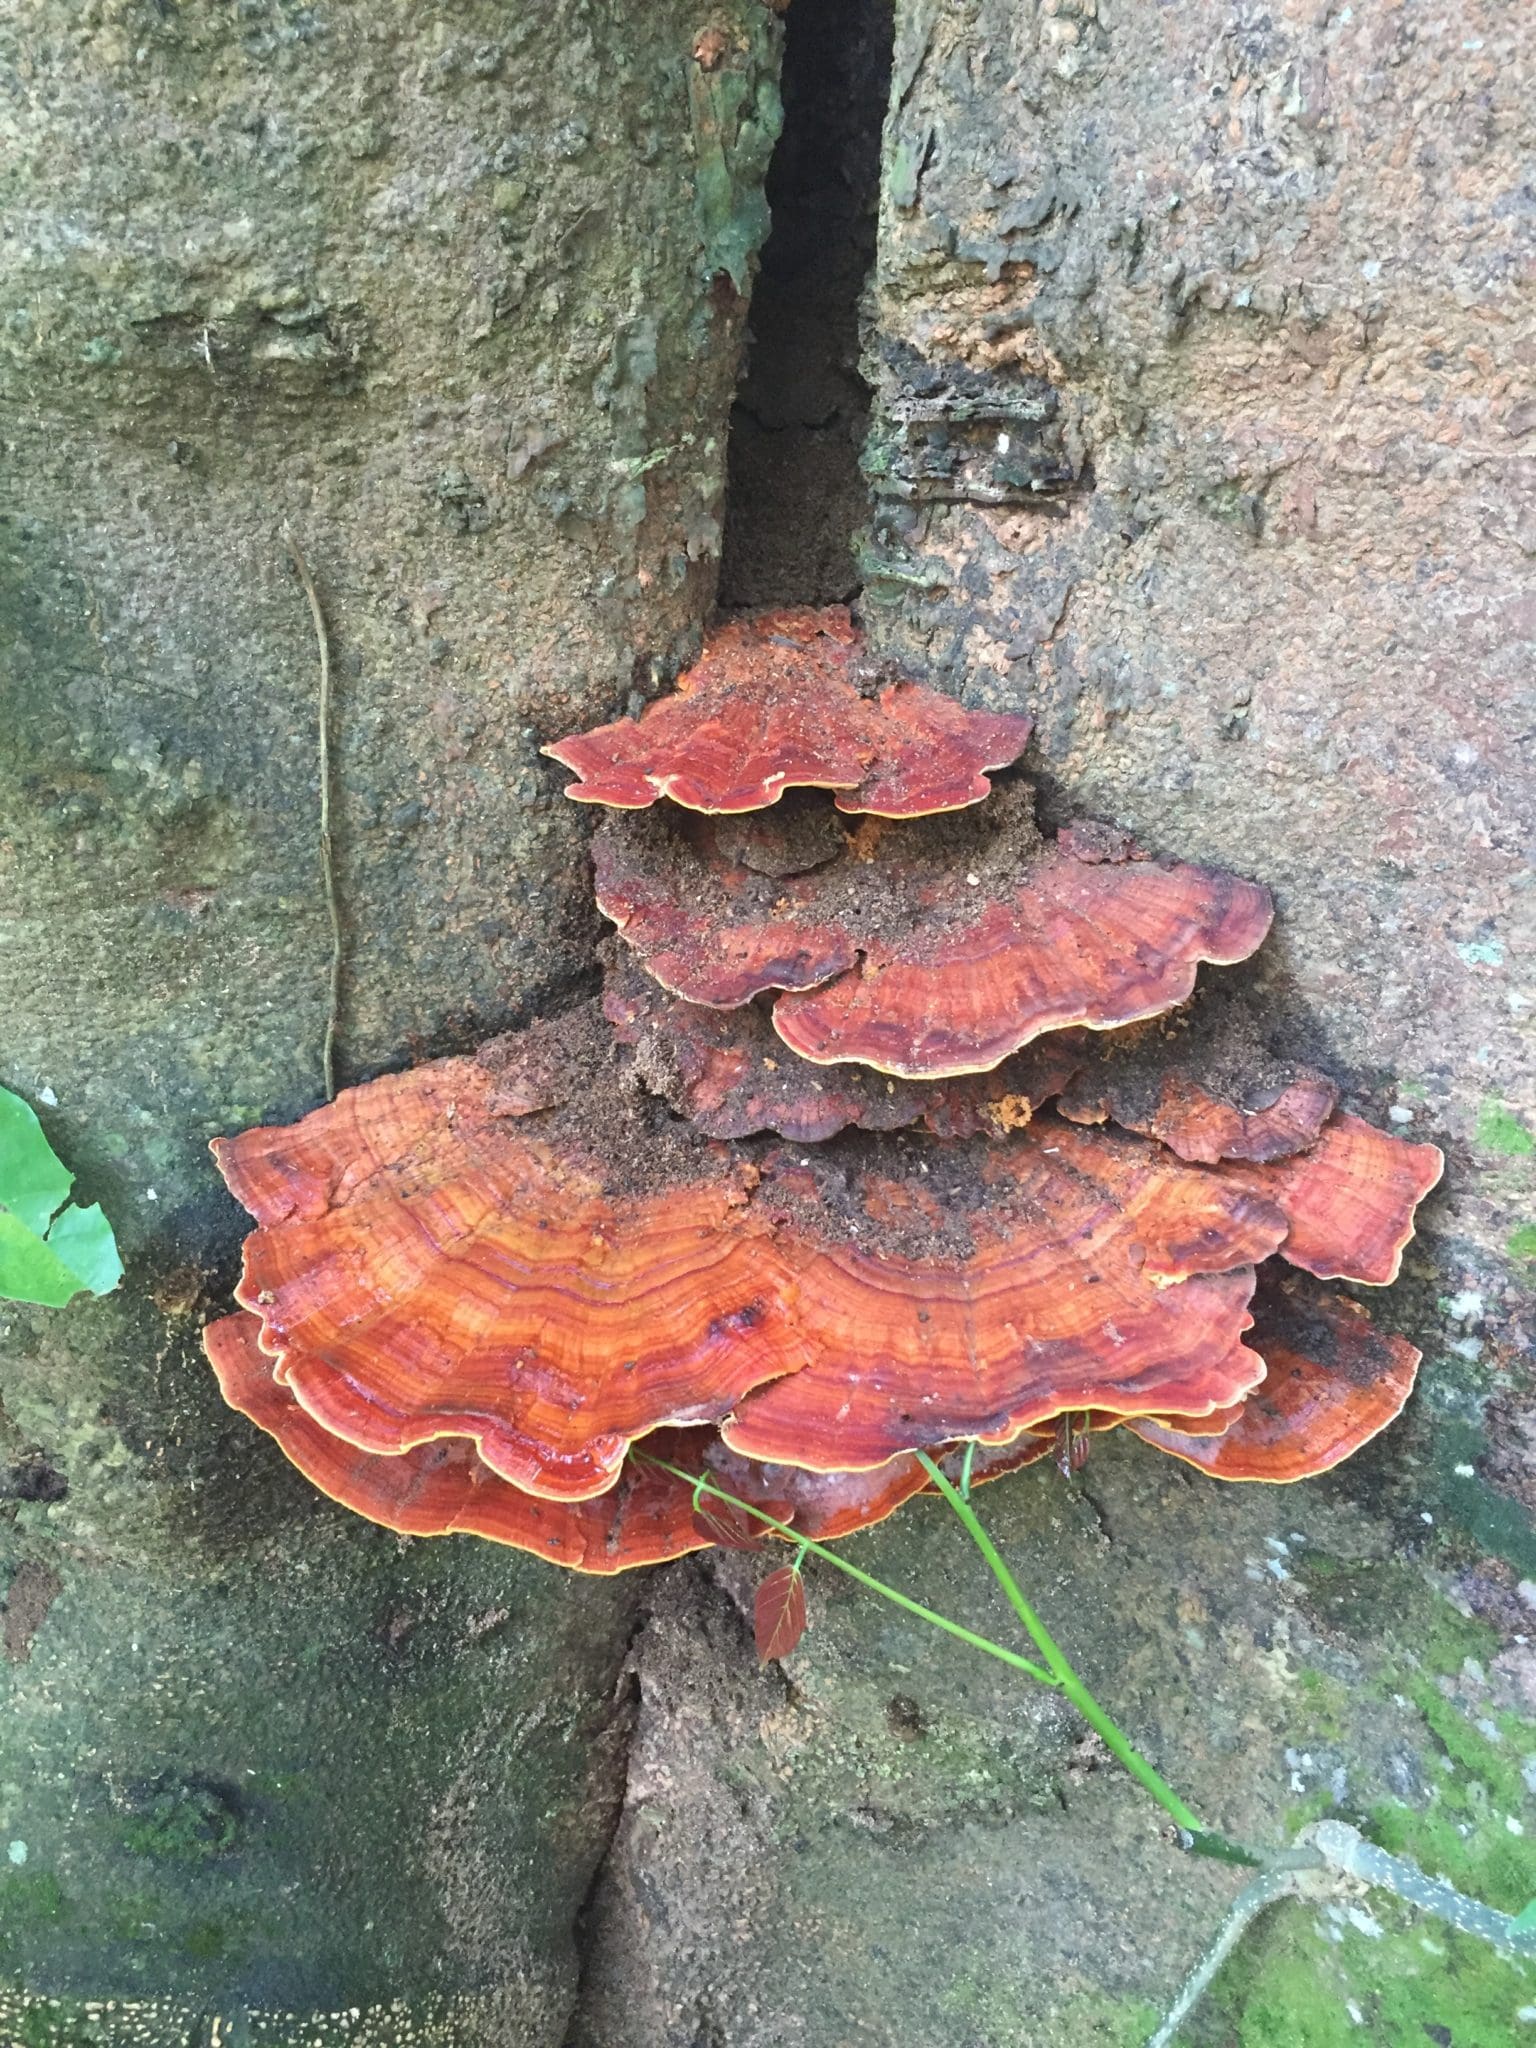 The forest had an abundance of fungi